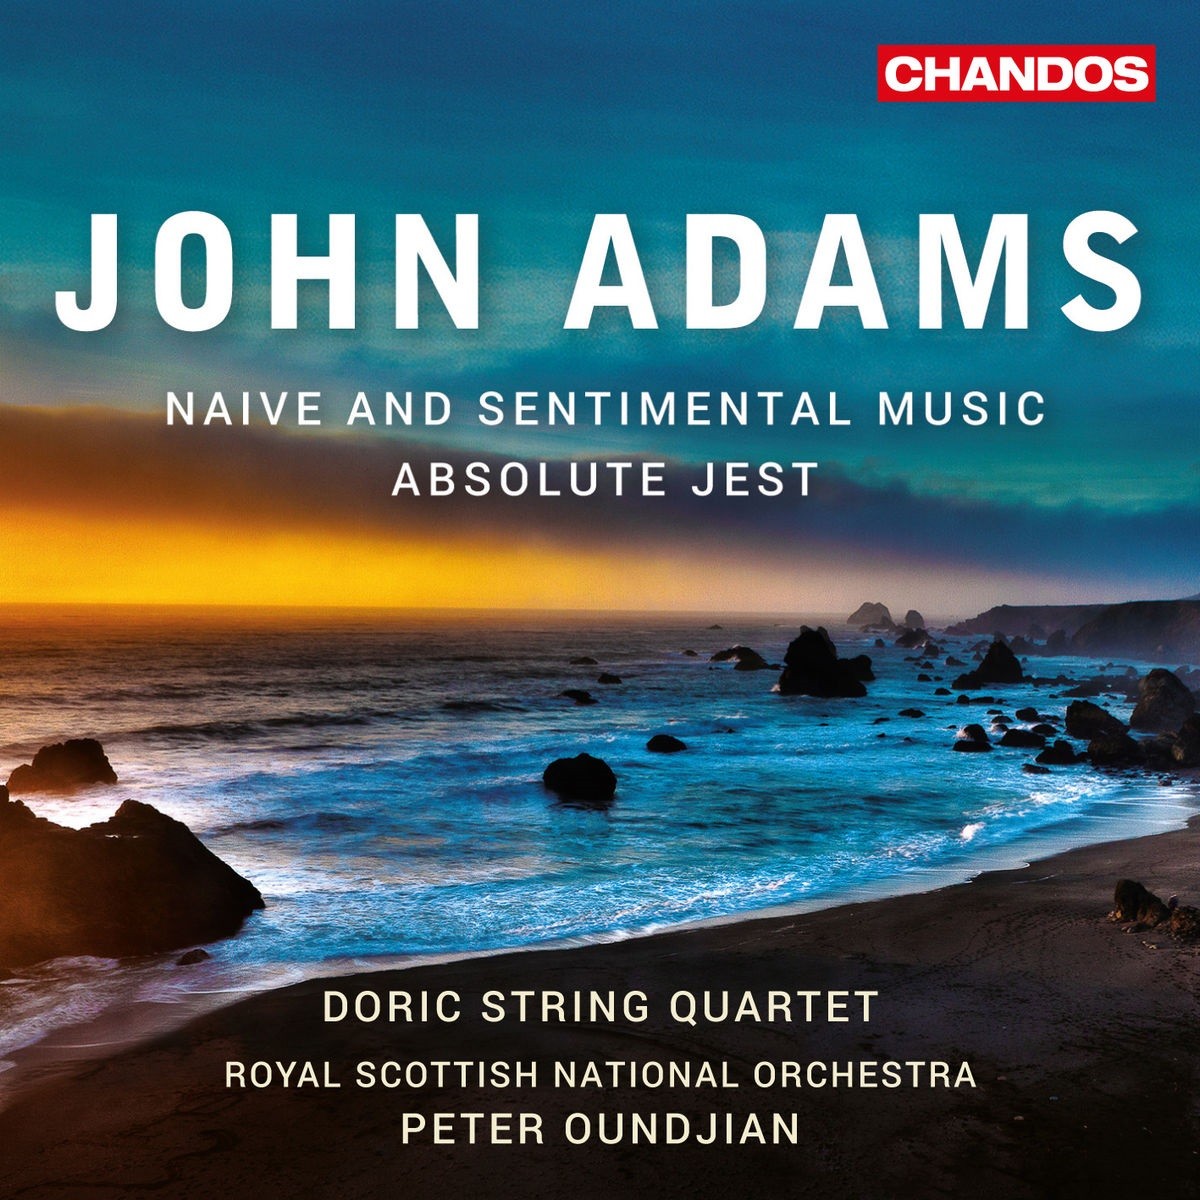 Doric String Quartet - John Adams: Naïve and Sentimental Music - Absolute Jest (2018) [FLAC 24bit/96kHz]